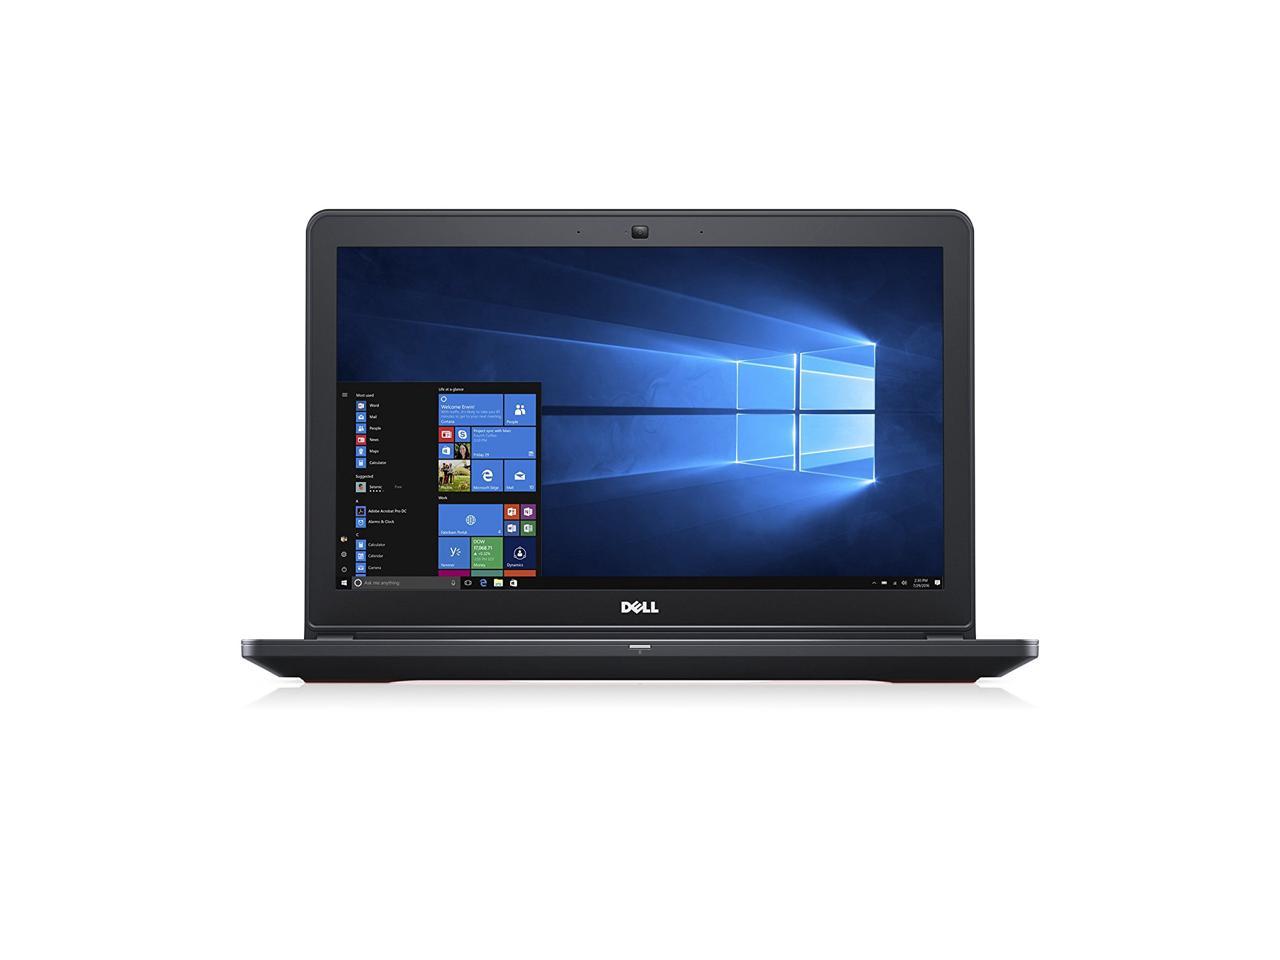 Dell Inspiron 15.6" Gaming Laptop (7th Gen Intel Core i5, 8 GB RAM, 256GB SSD, NVIDIA GTX 1050) (i5577-5335BLK-PUS) Notebook PC Computer